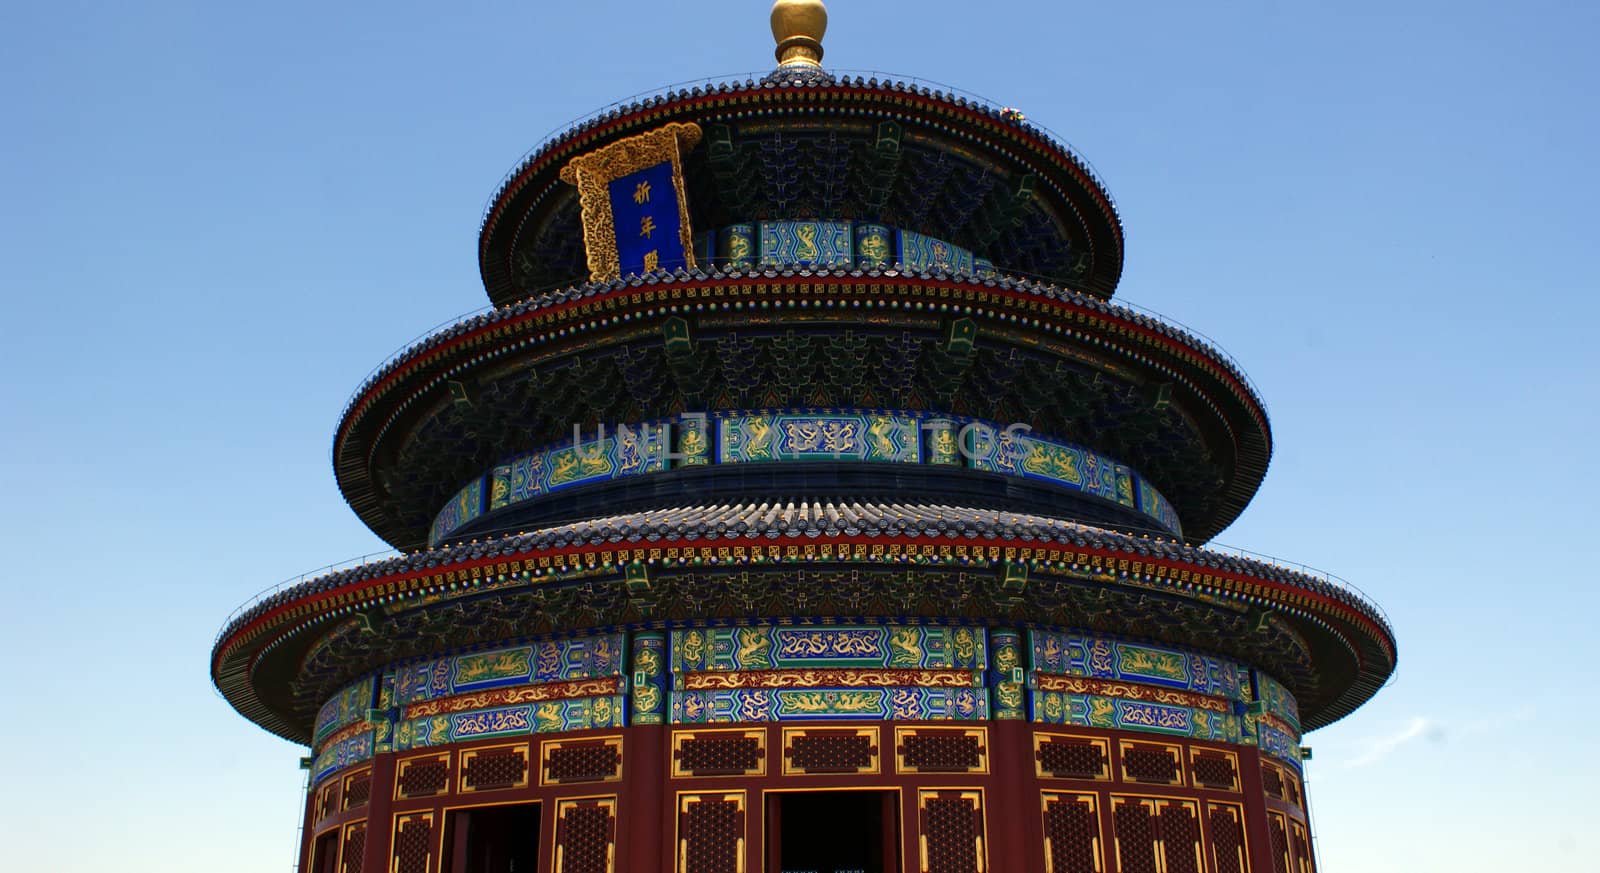 TEMPLE OF HEAVEN IN BEIJING IN CHINA